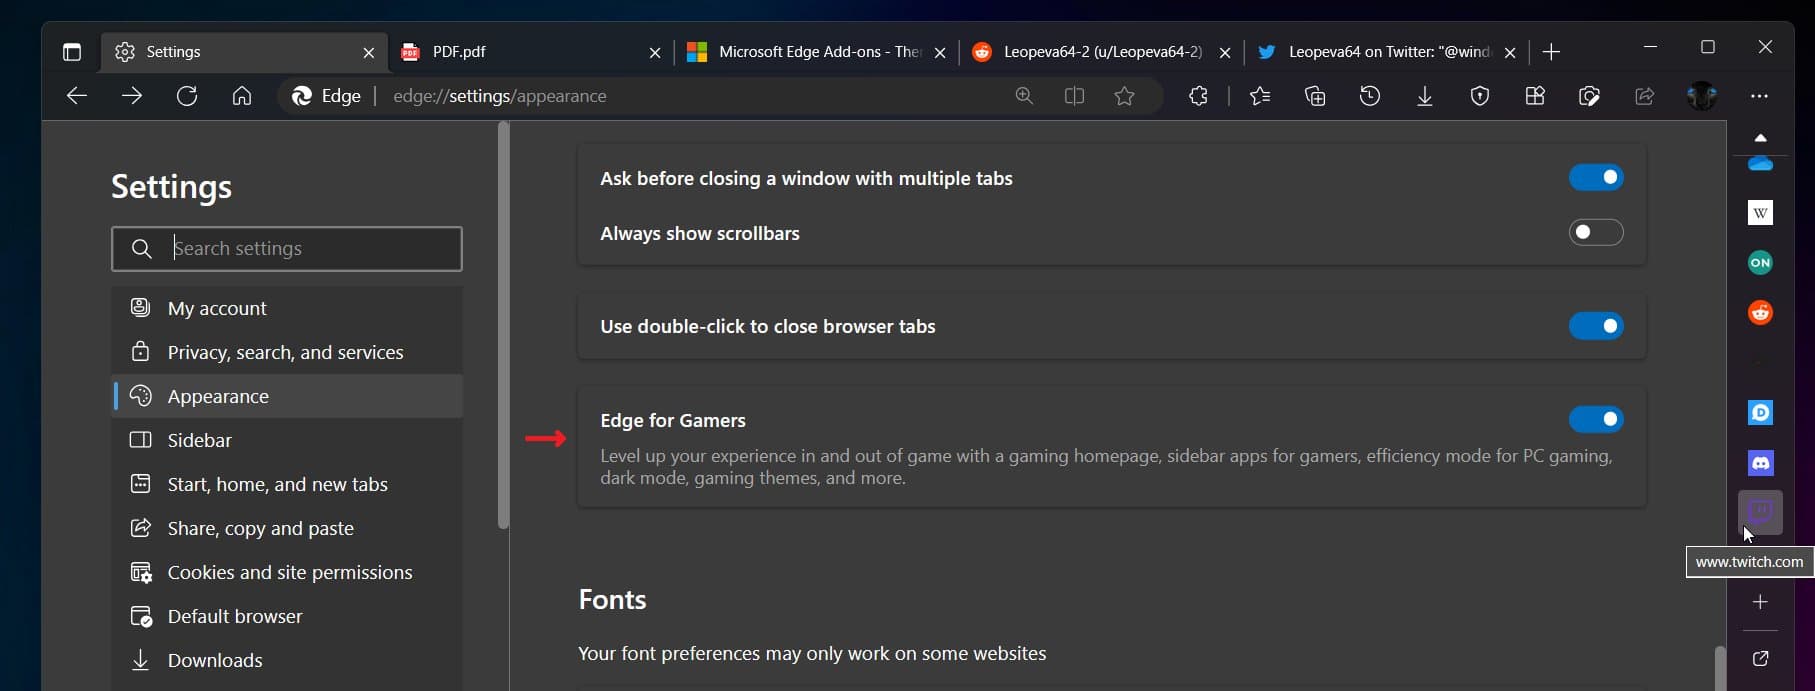 Microsoft Edge Canary版に『Edge for Gamers』トグルが追加